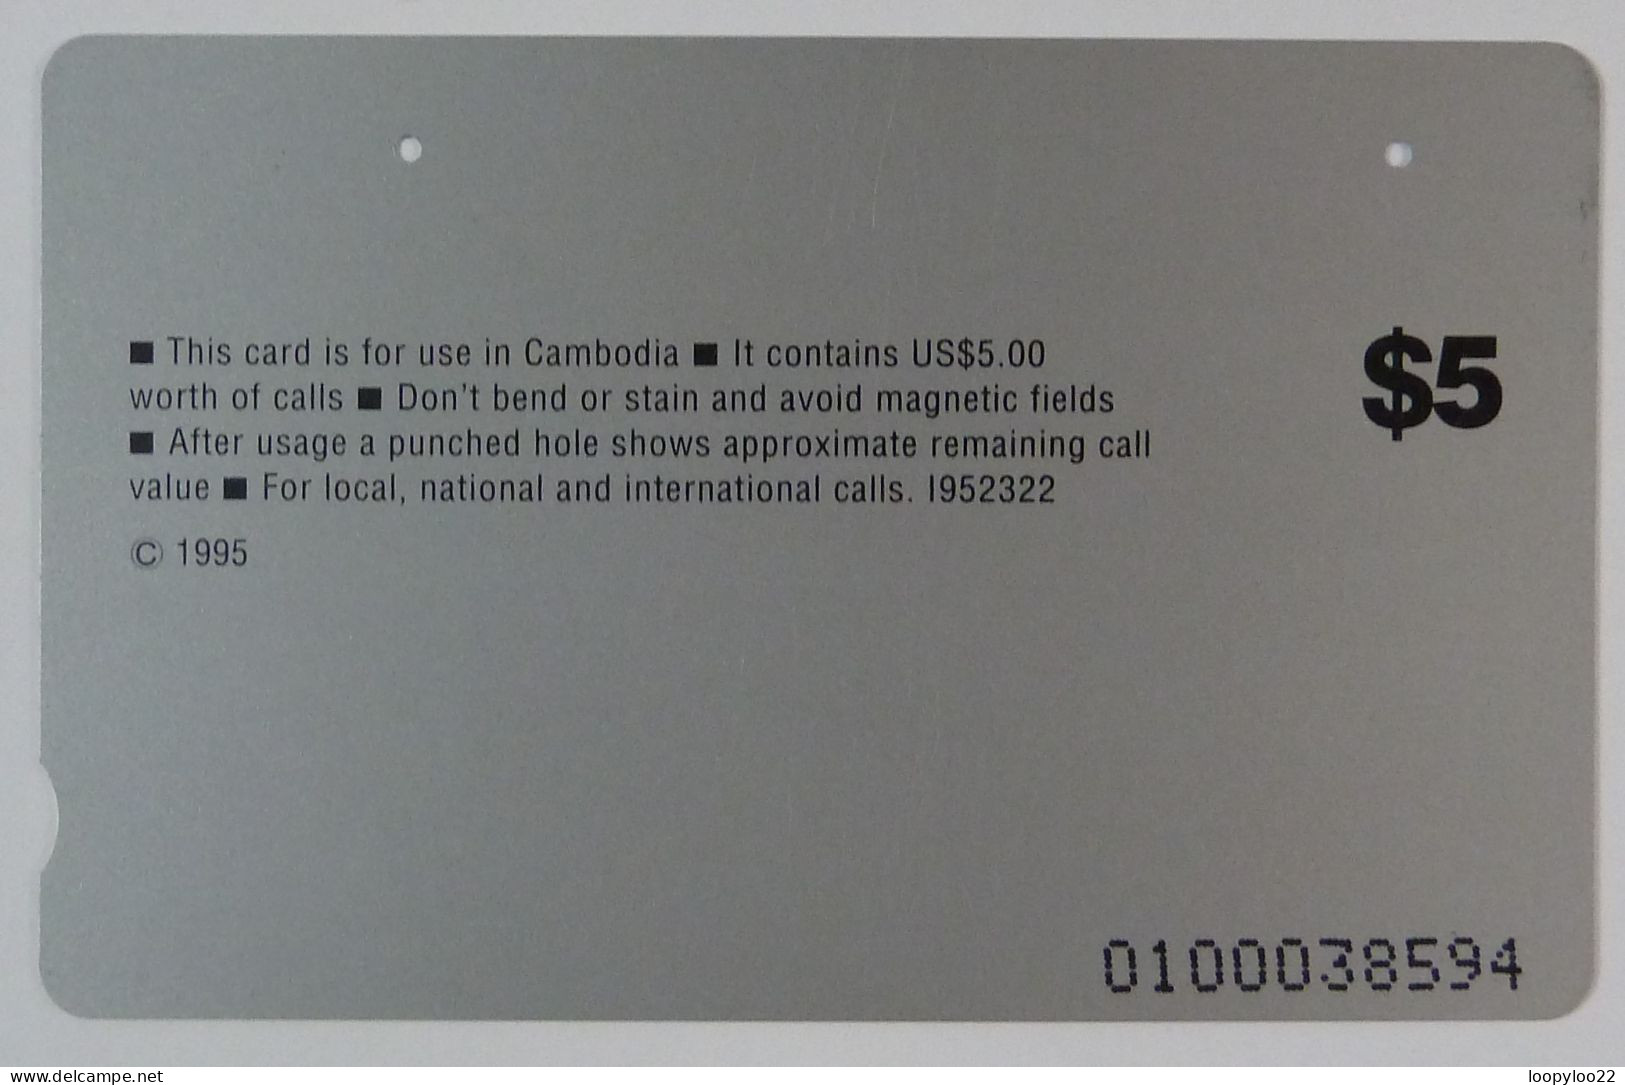 CAMBODIA - Anritsu - ANGKOR RUINS - Smaller Control Number - $5 - Used - Cambodia